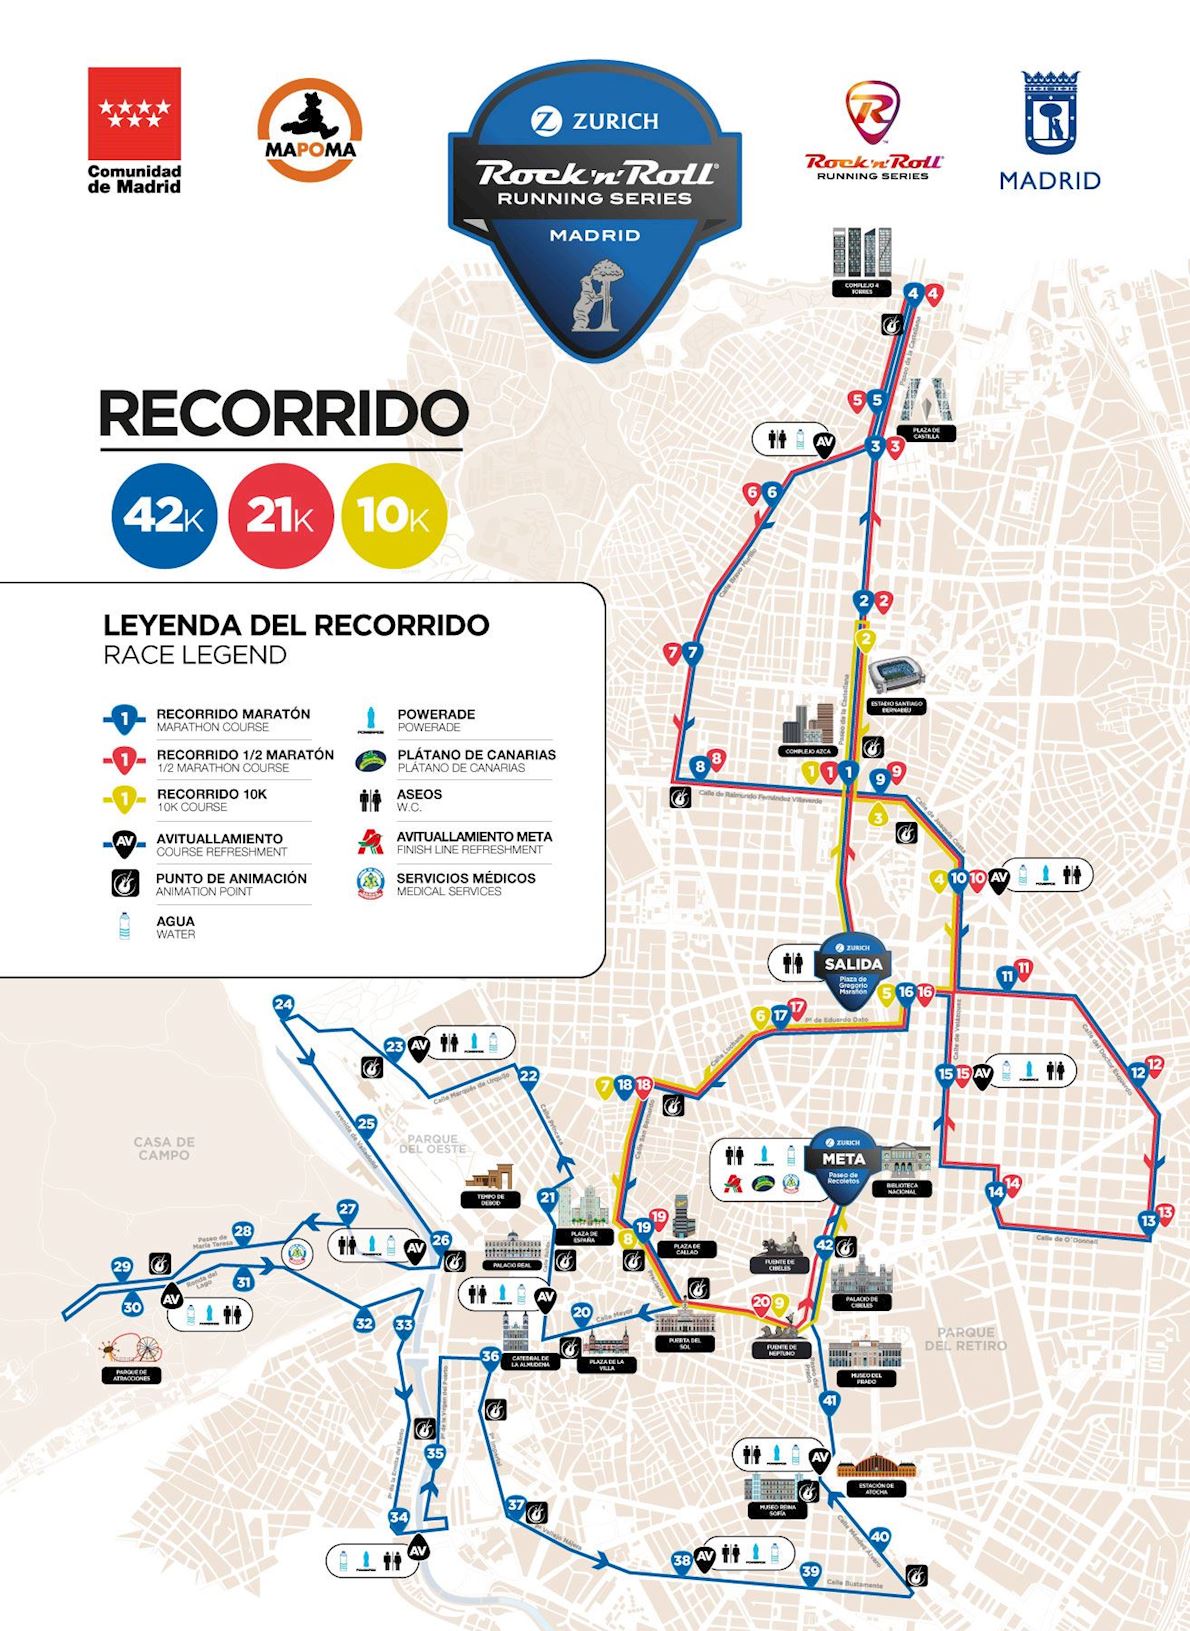 ZURICH Rock'n'Roll Running Series Madrid Route Map